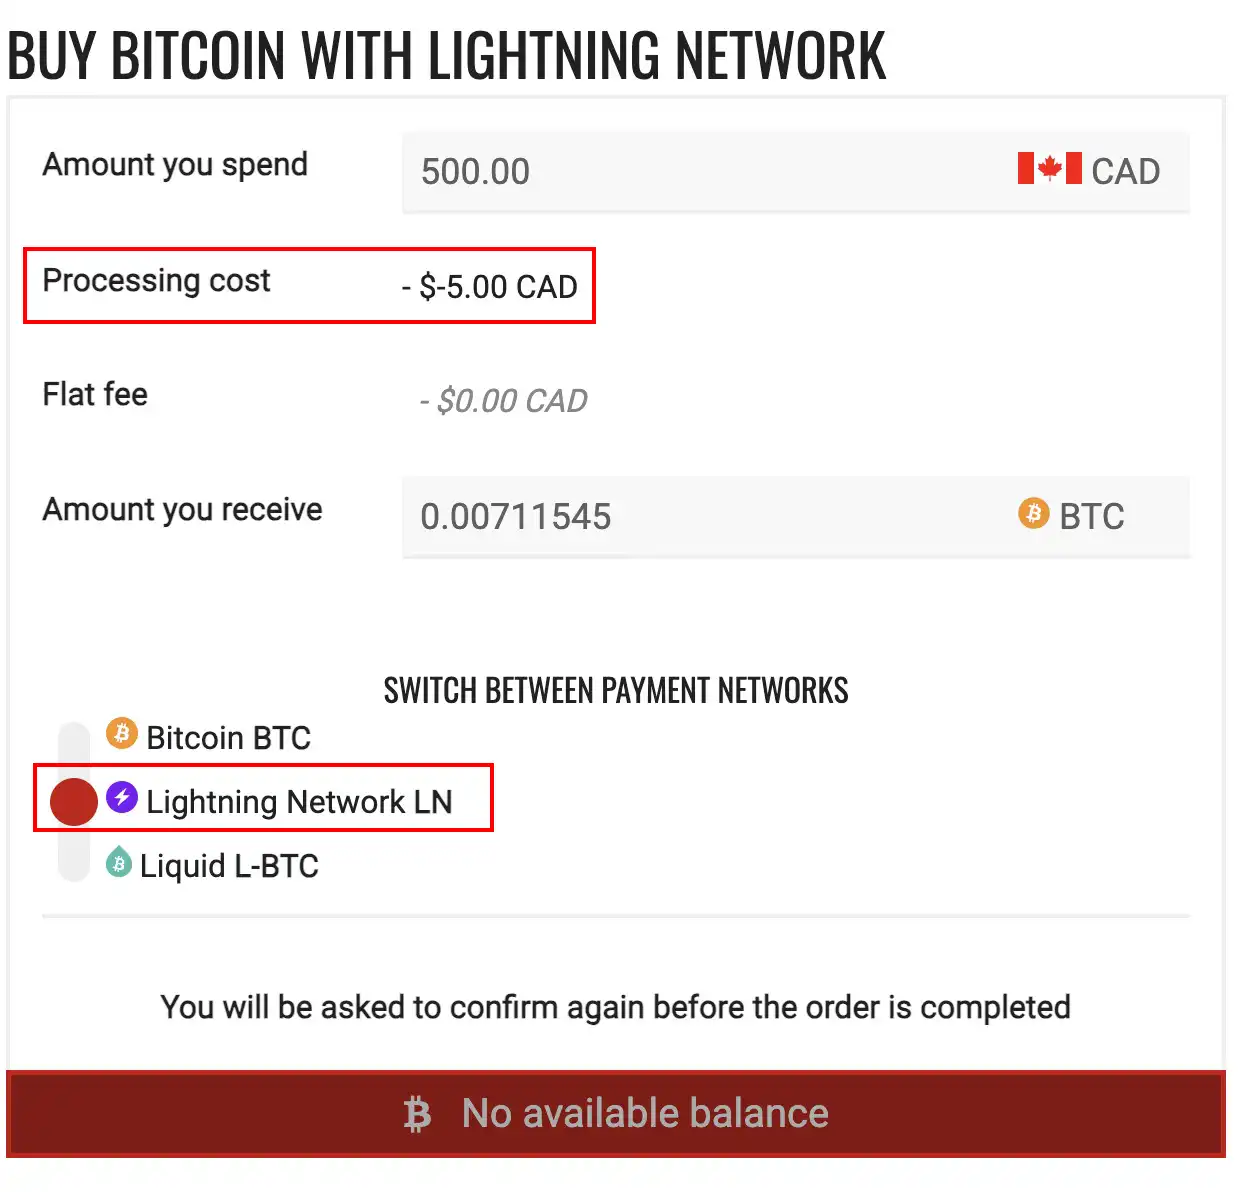 Bull Bitcoin Buy Bitcoin With The Lightning Network